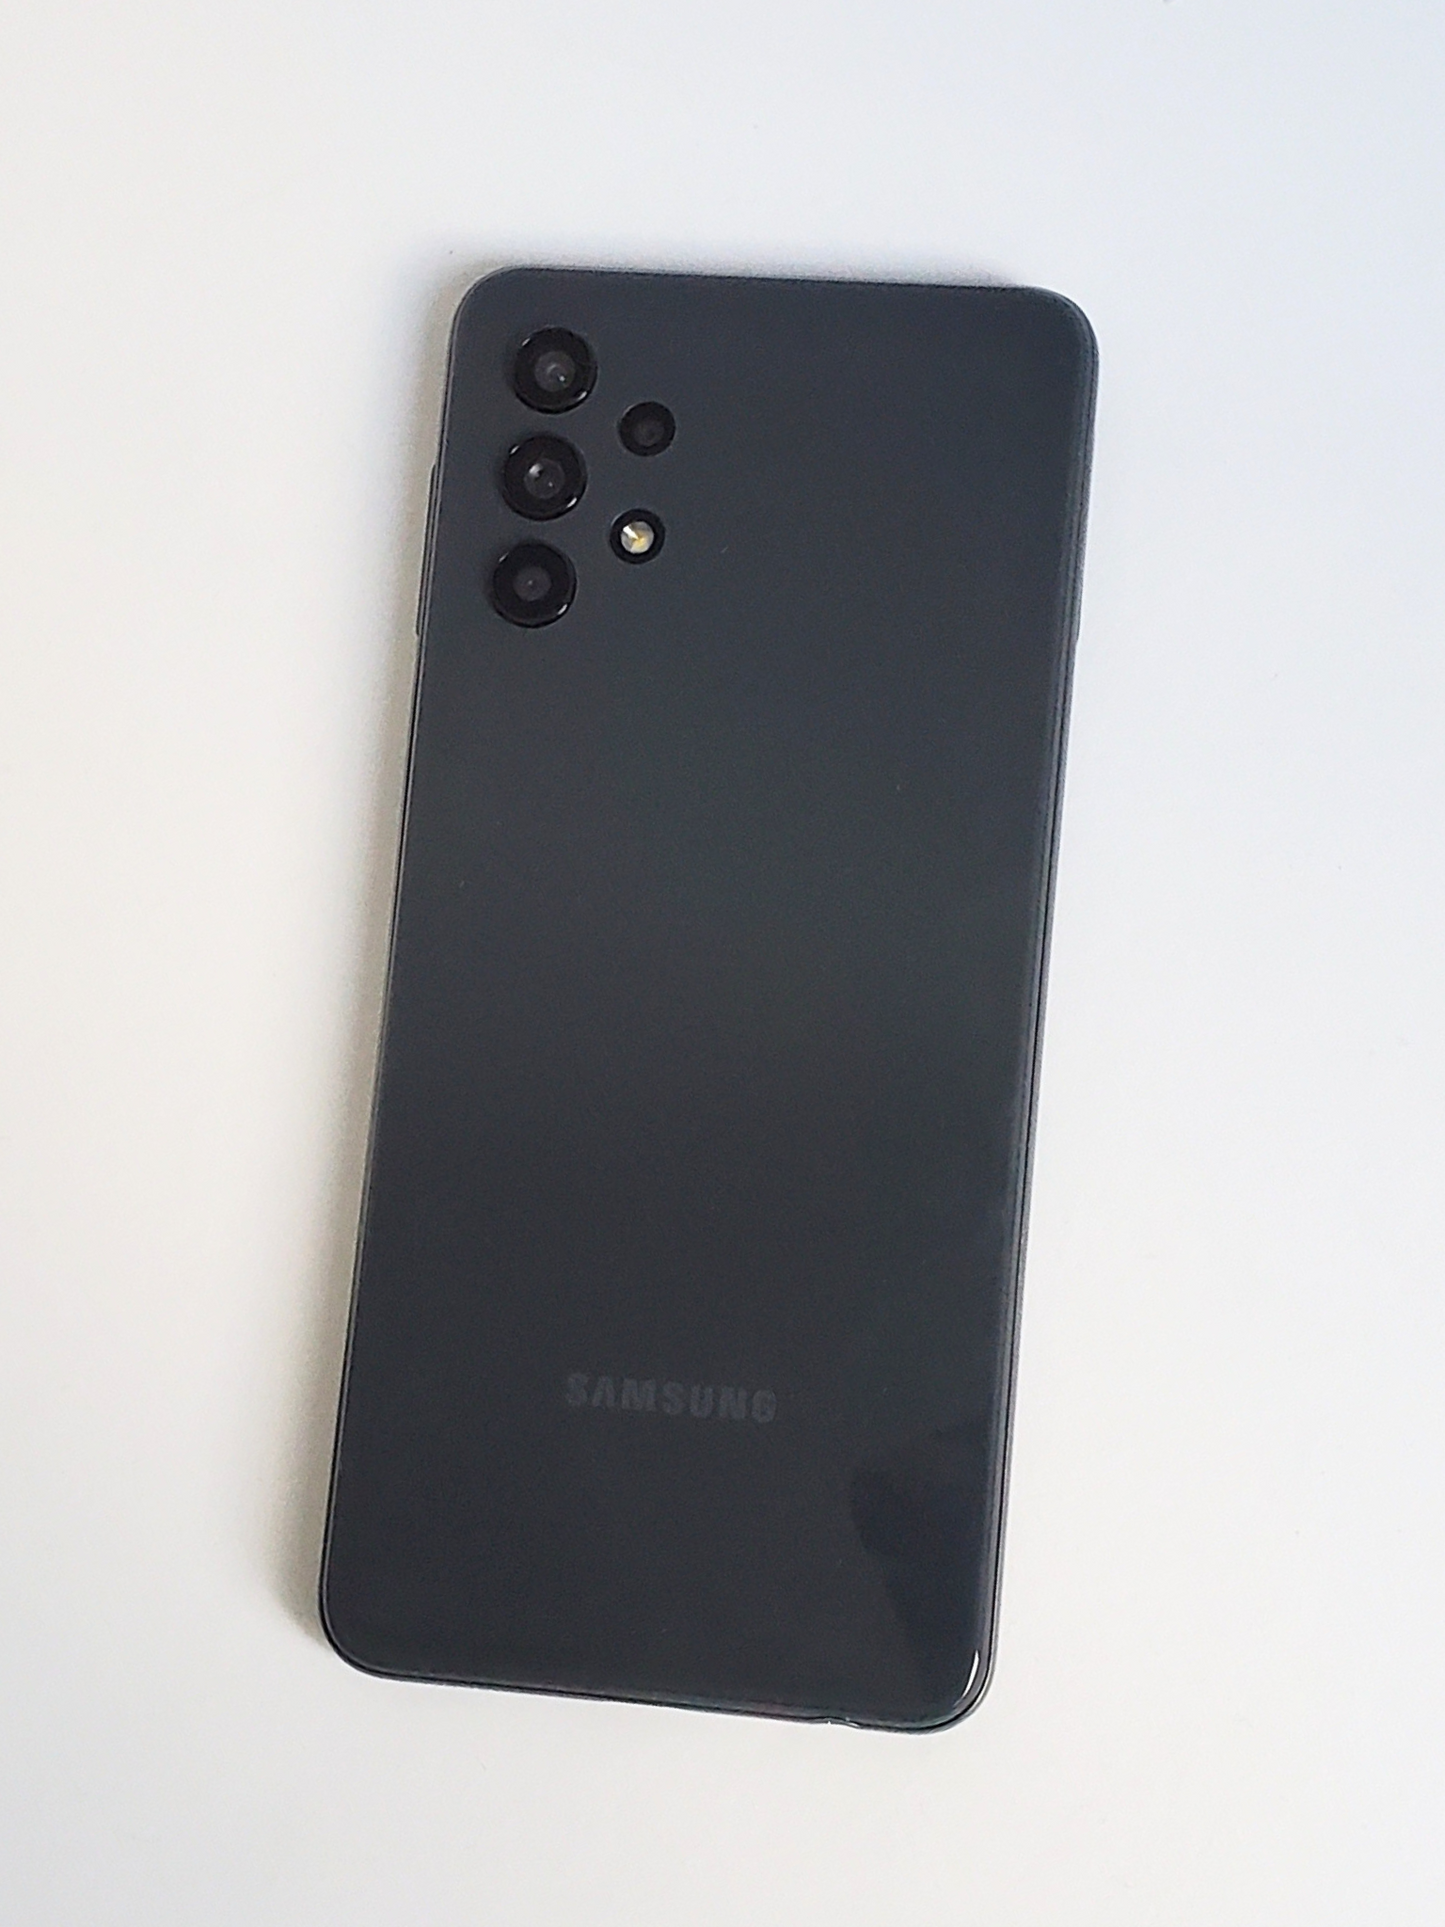 Samsung Galaxy A32 (64GB) - Schwarz - Wie neu!